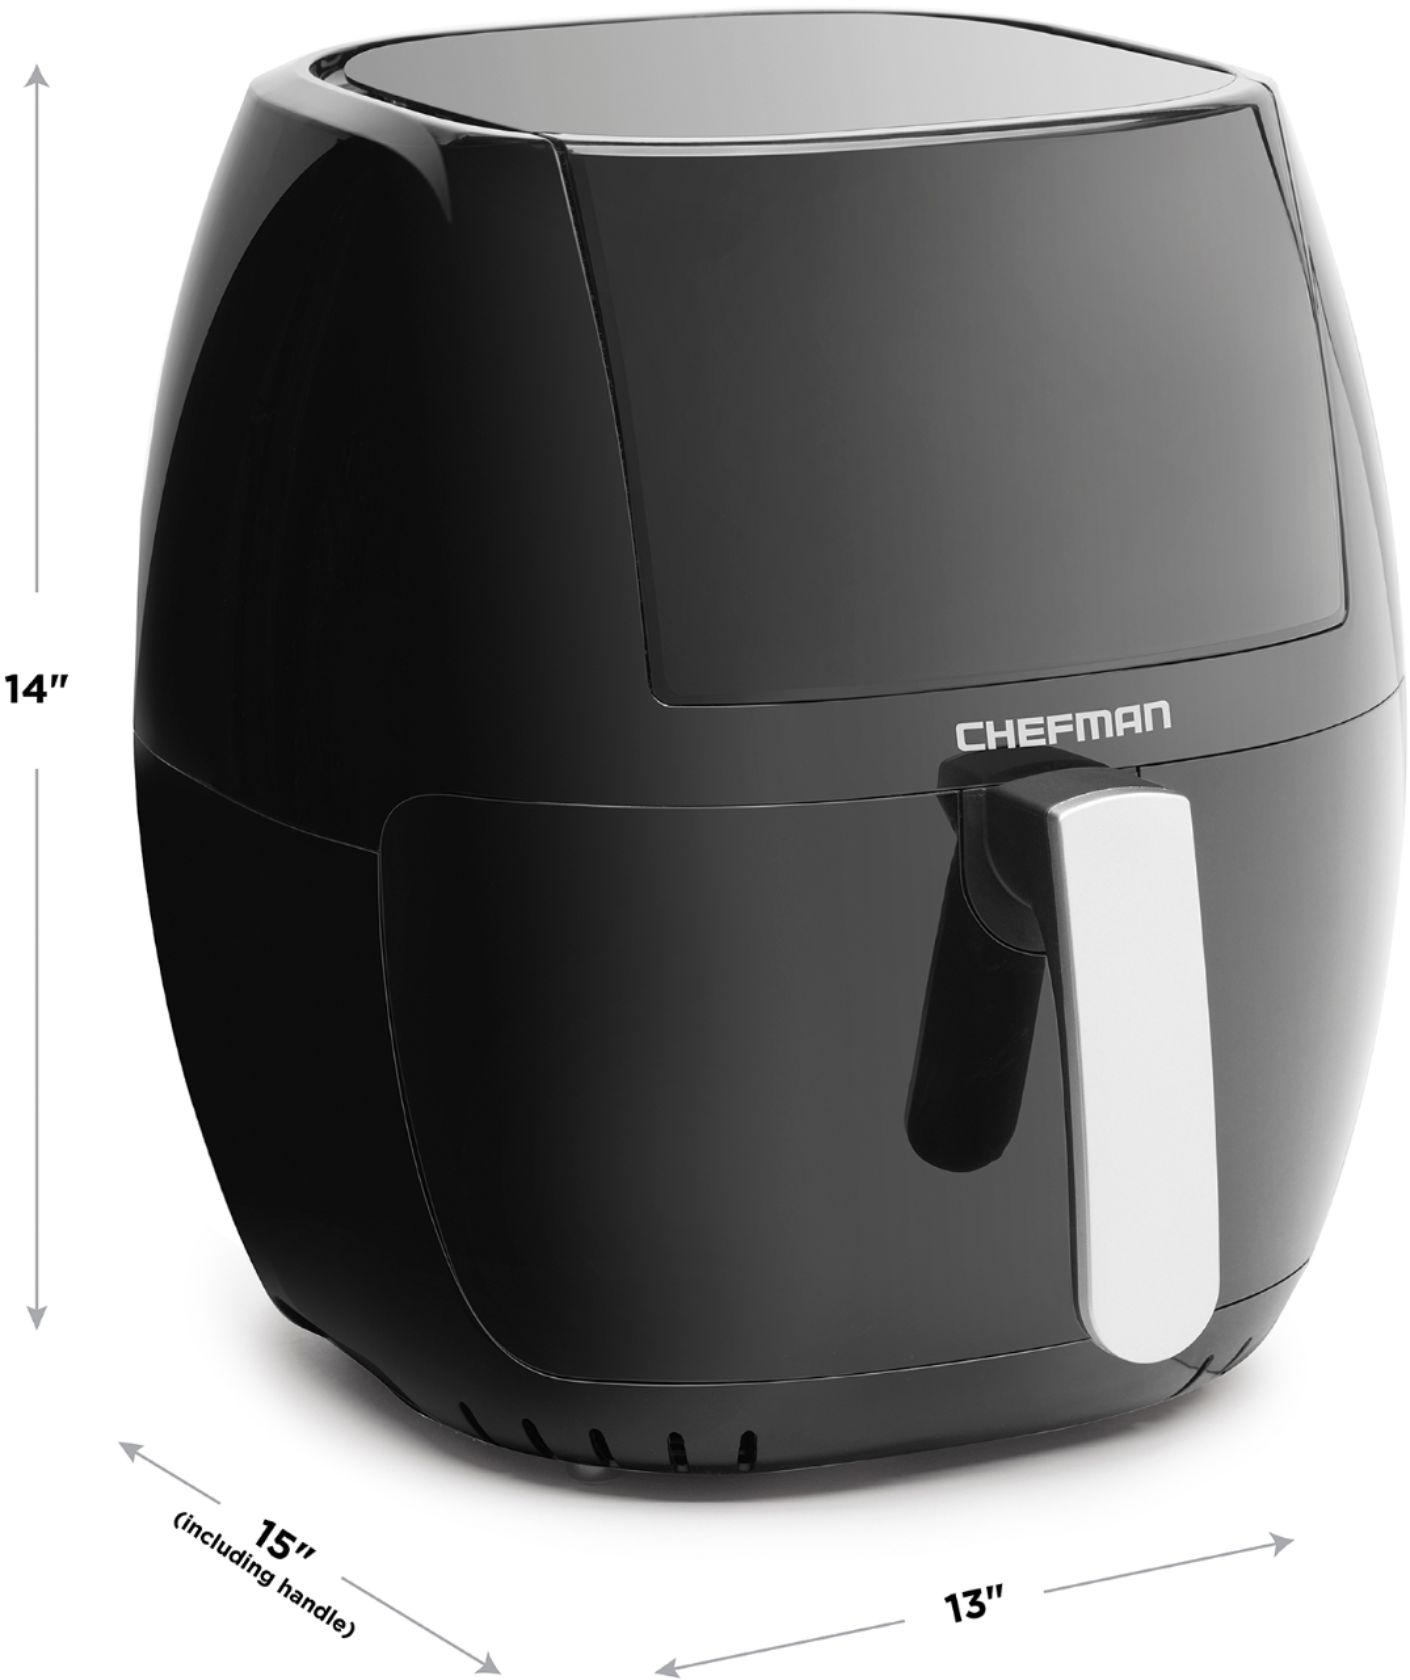 Best Buy: Chefman TurboFry Touch 8 Qt. Air Fryer w/ Advanced